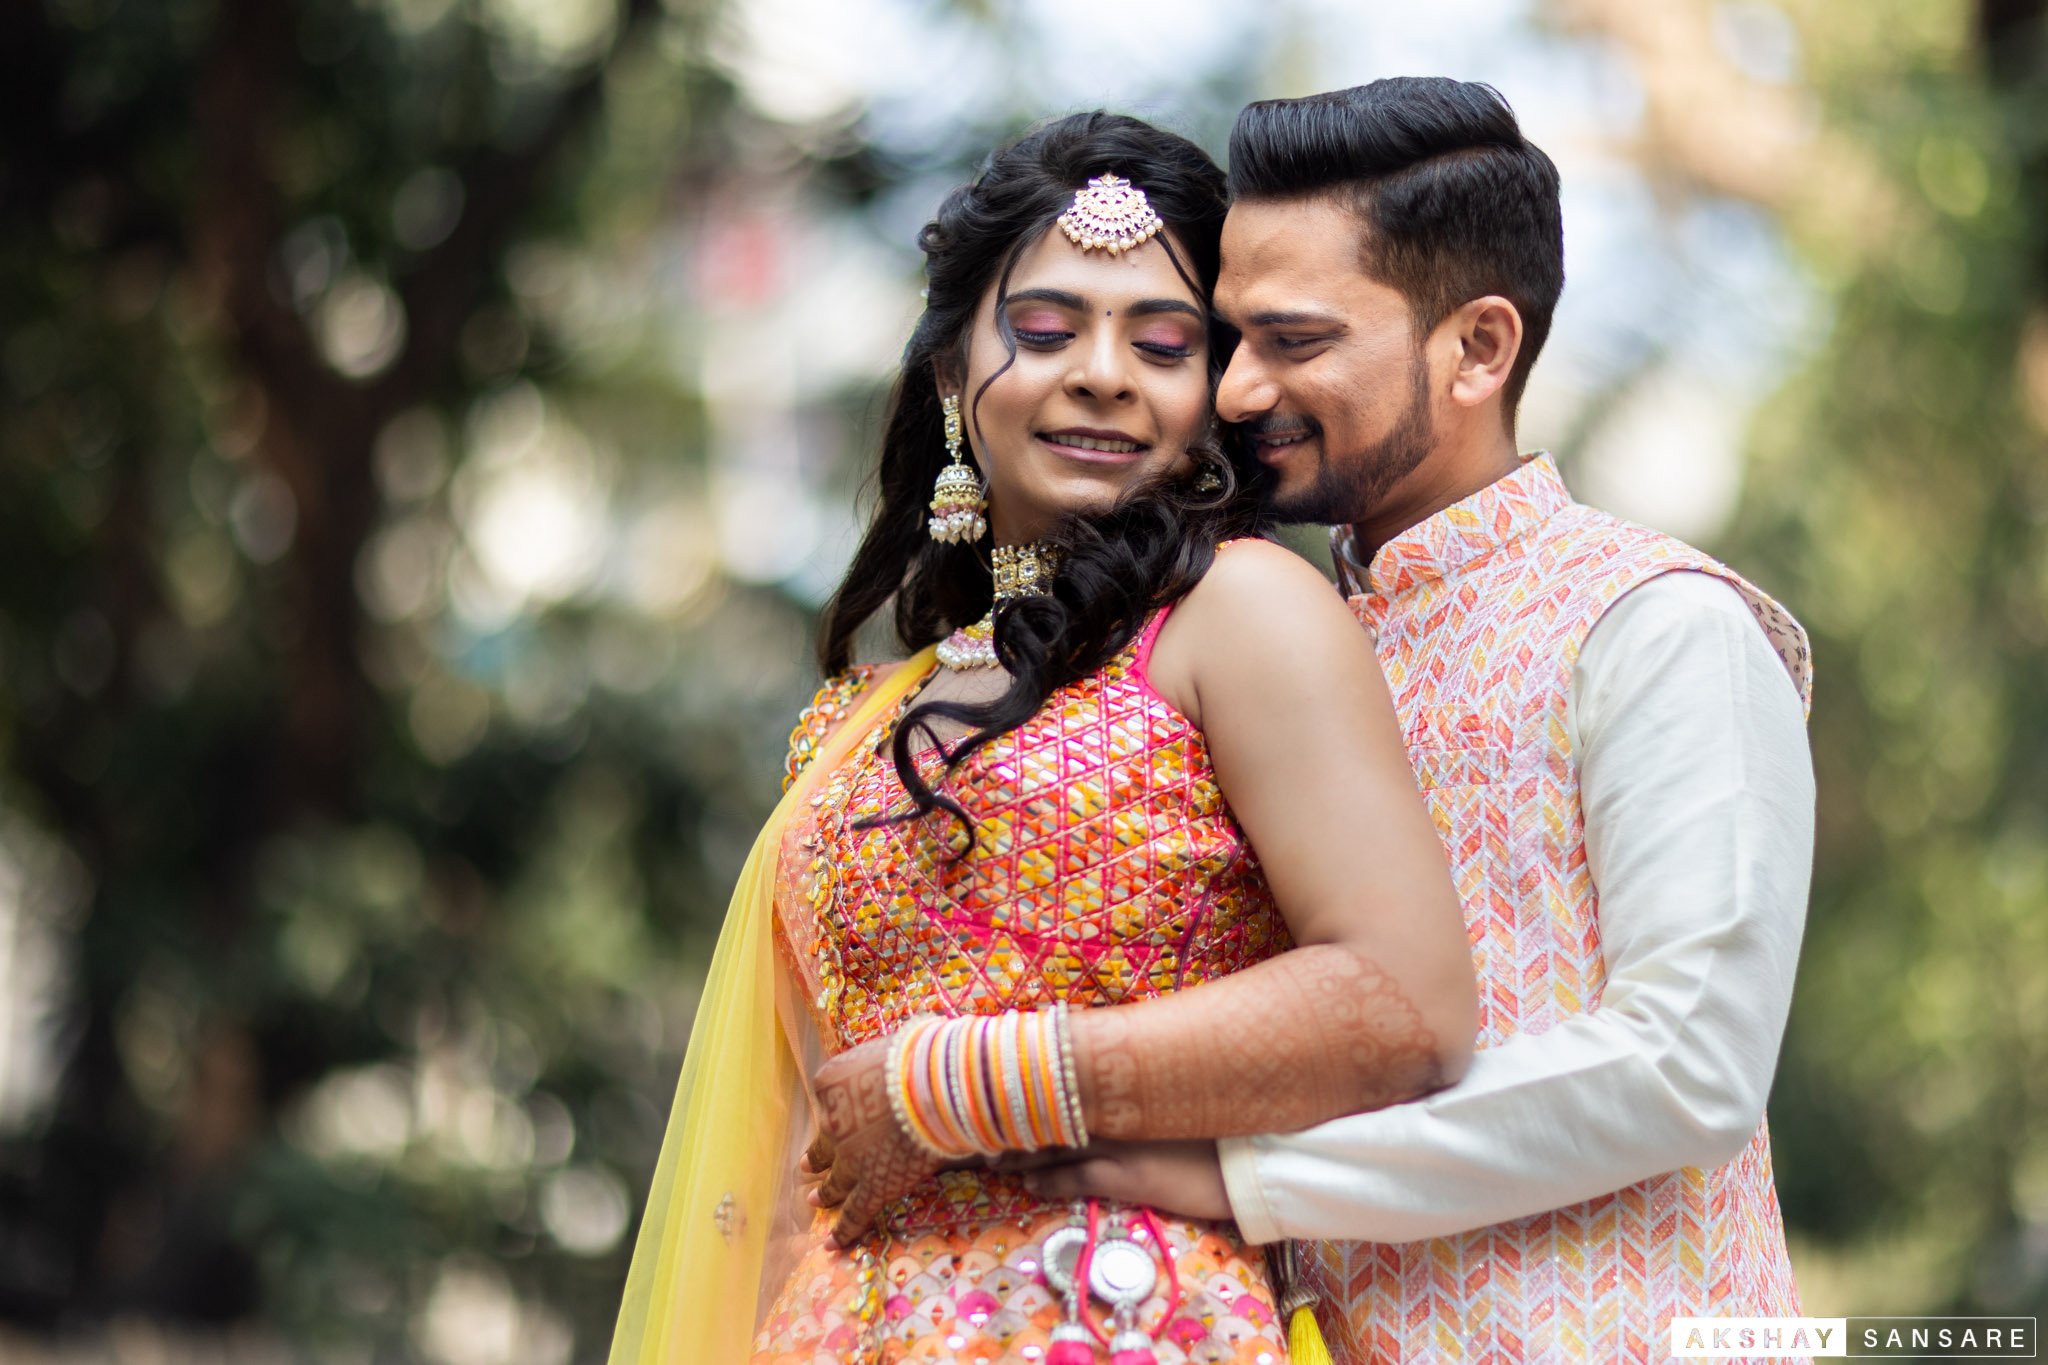 Lipika x Bhavya Compress Akshay Sansare Photography & Films Best wedding photographers in mumbai india-9.jpg